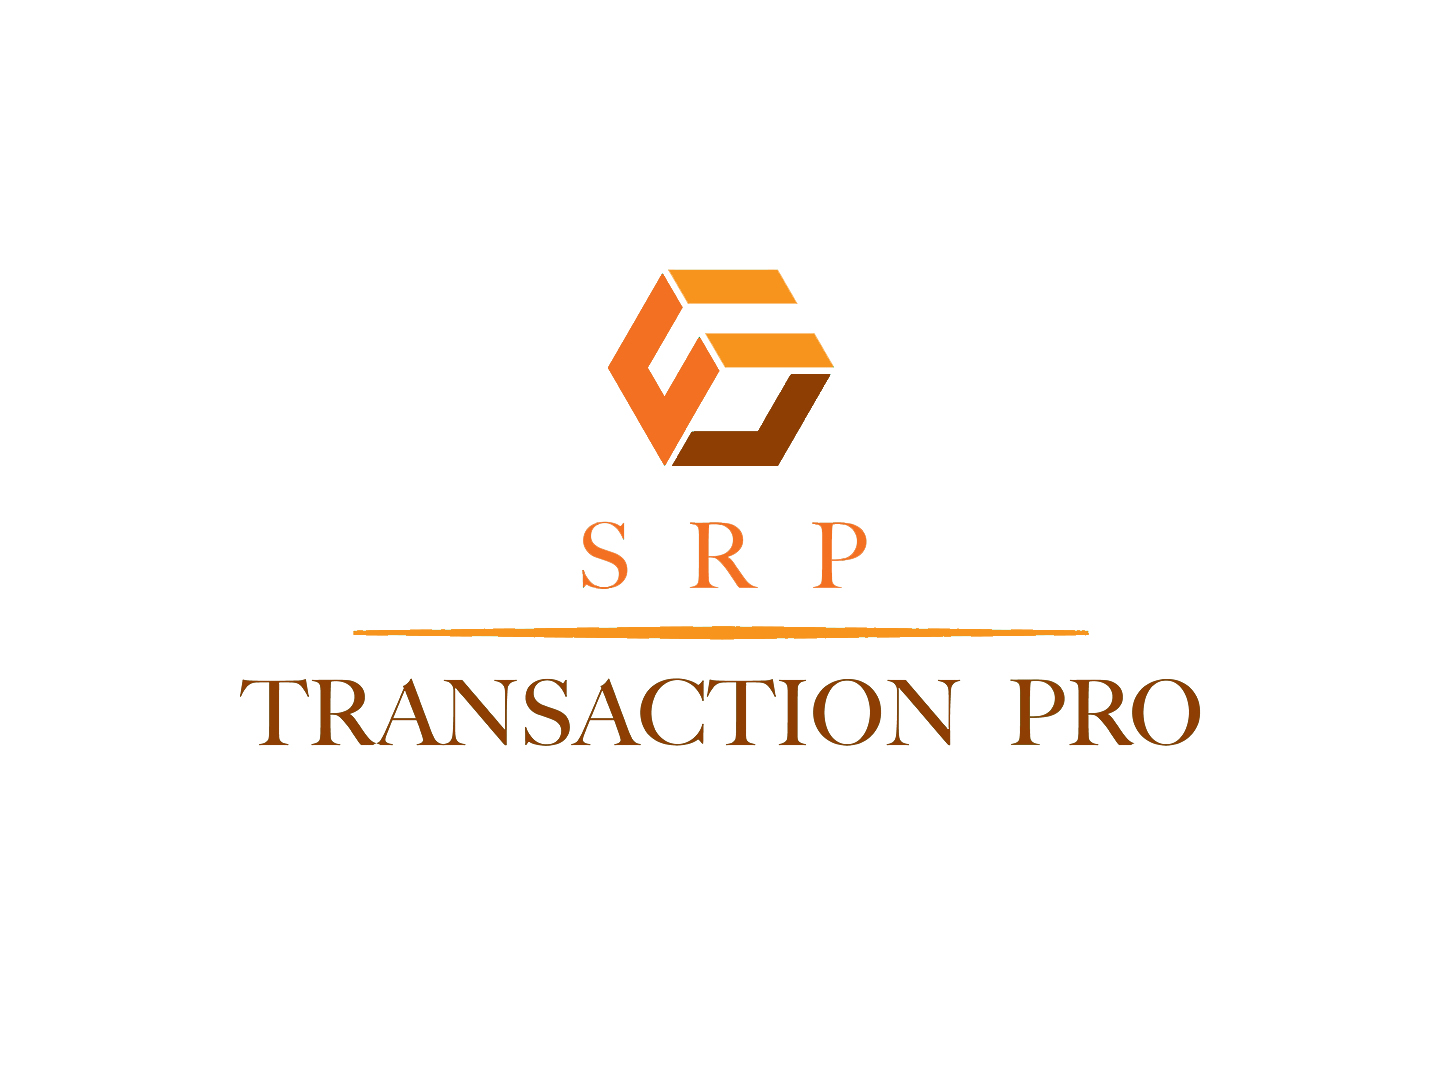 SRP TRANSACTION PRO